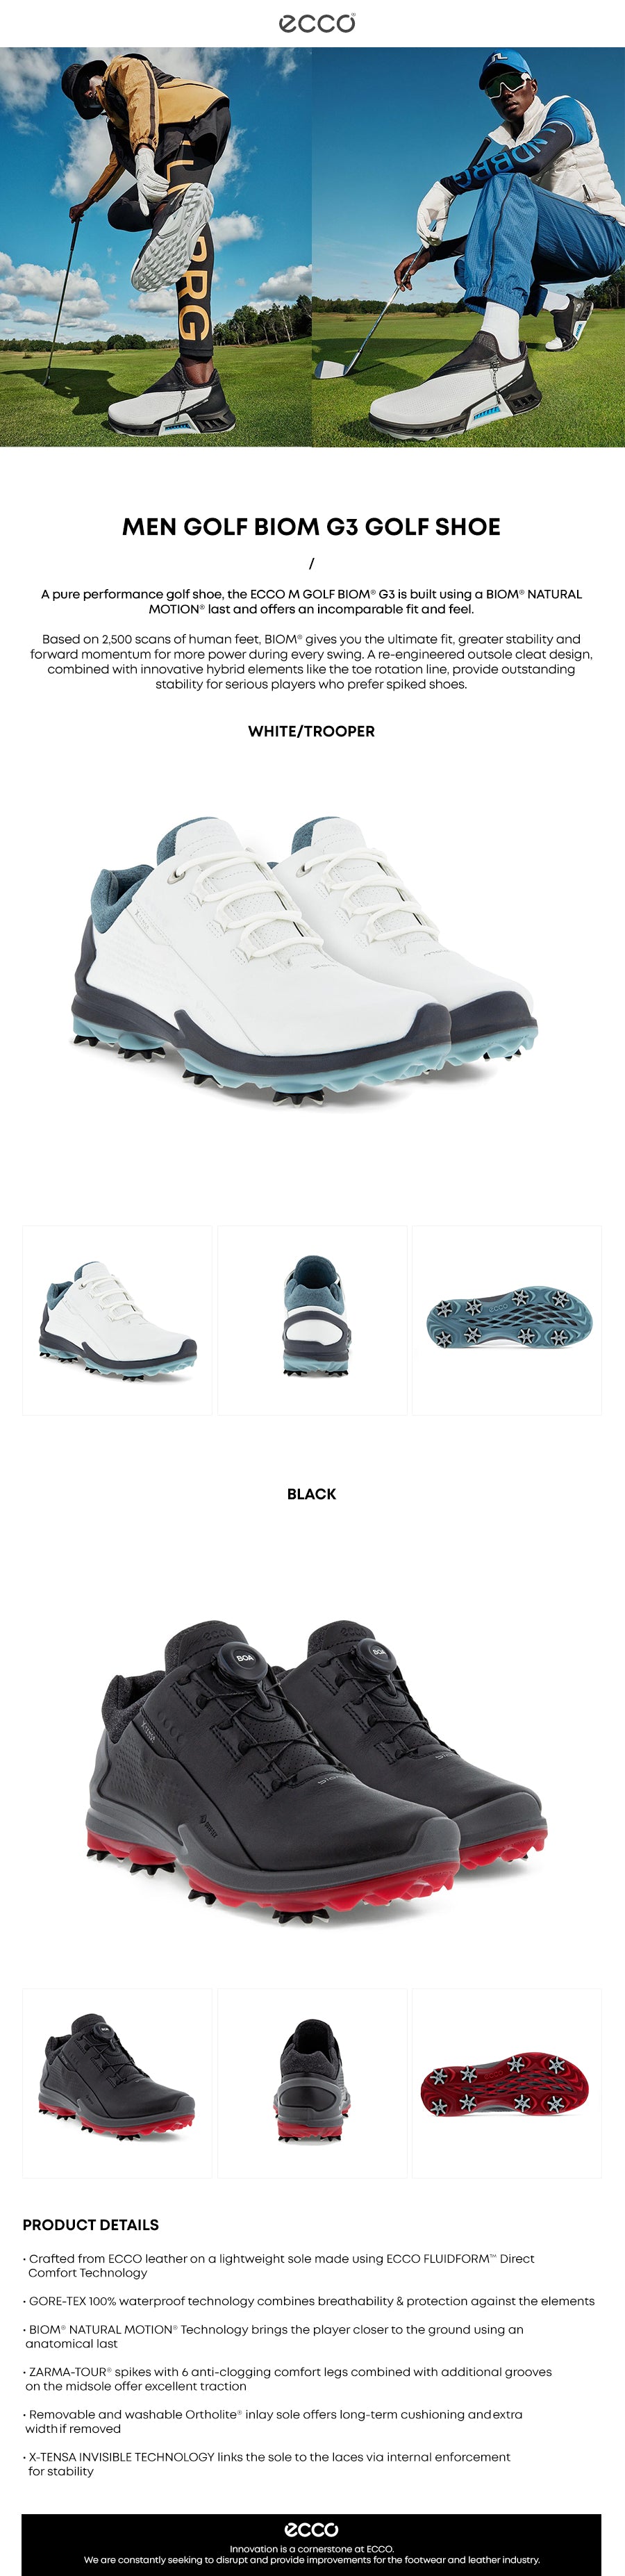 Ecco-Men-Golf-Biom-G3-Golf-Chaussure